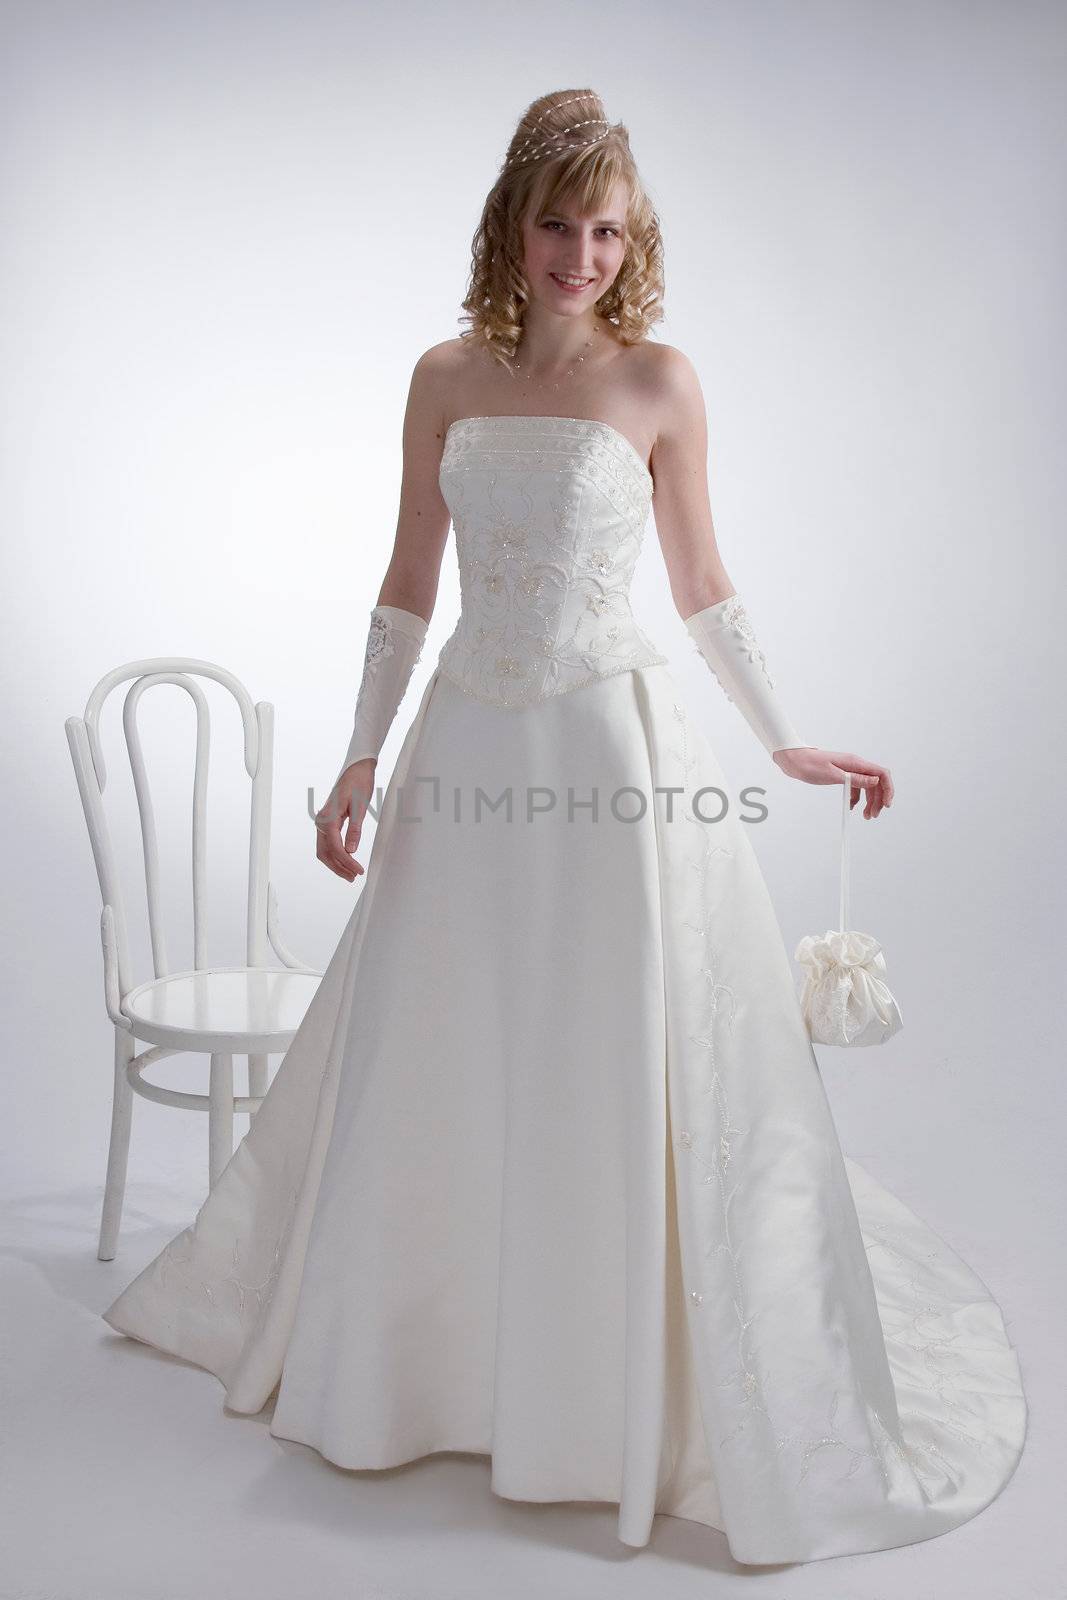 Beautiful bride in white dress 3. by fotorobs